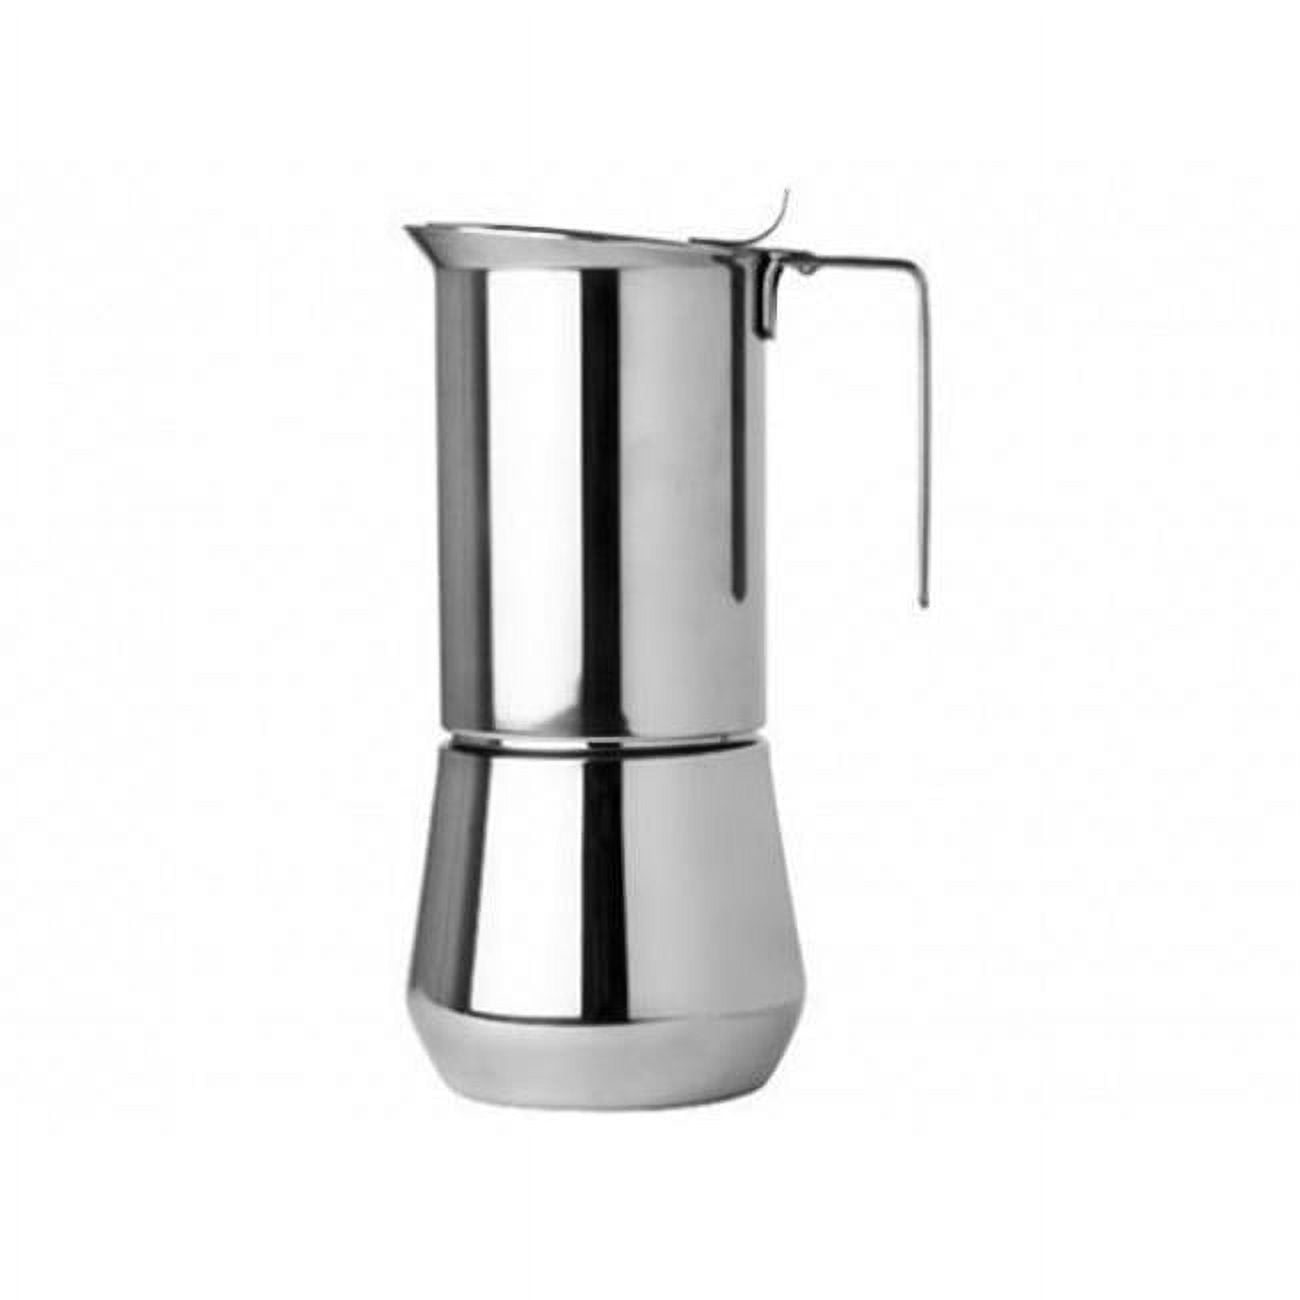 Brentwood TS-119S 6-Cup Electric Moka Pot Espresso Machine (Silver)